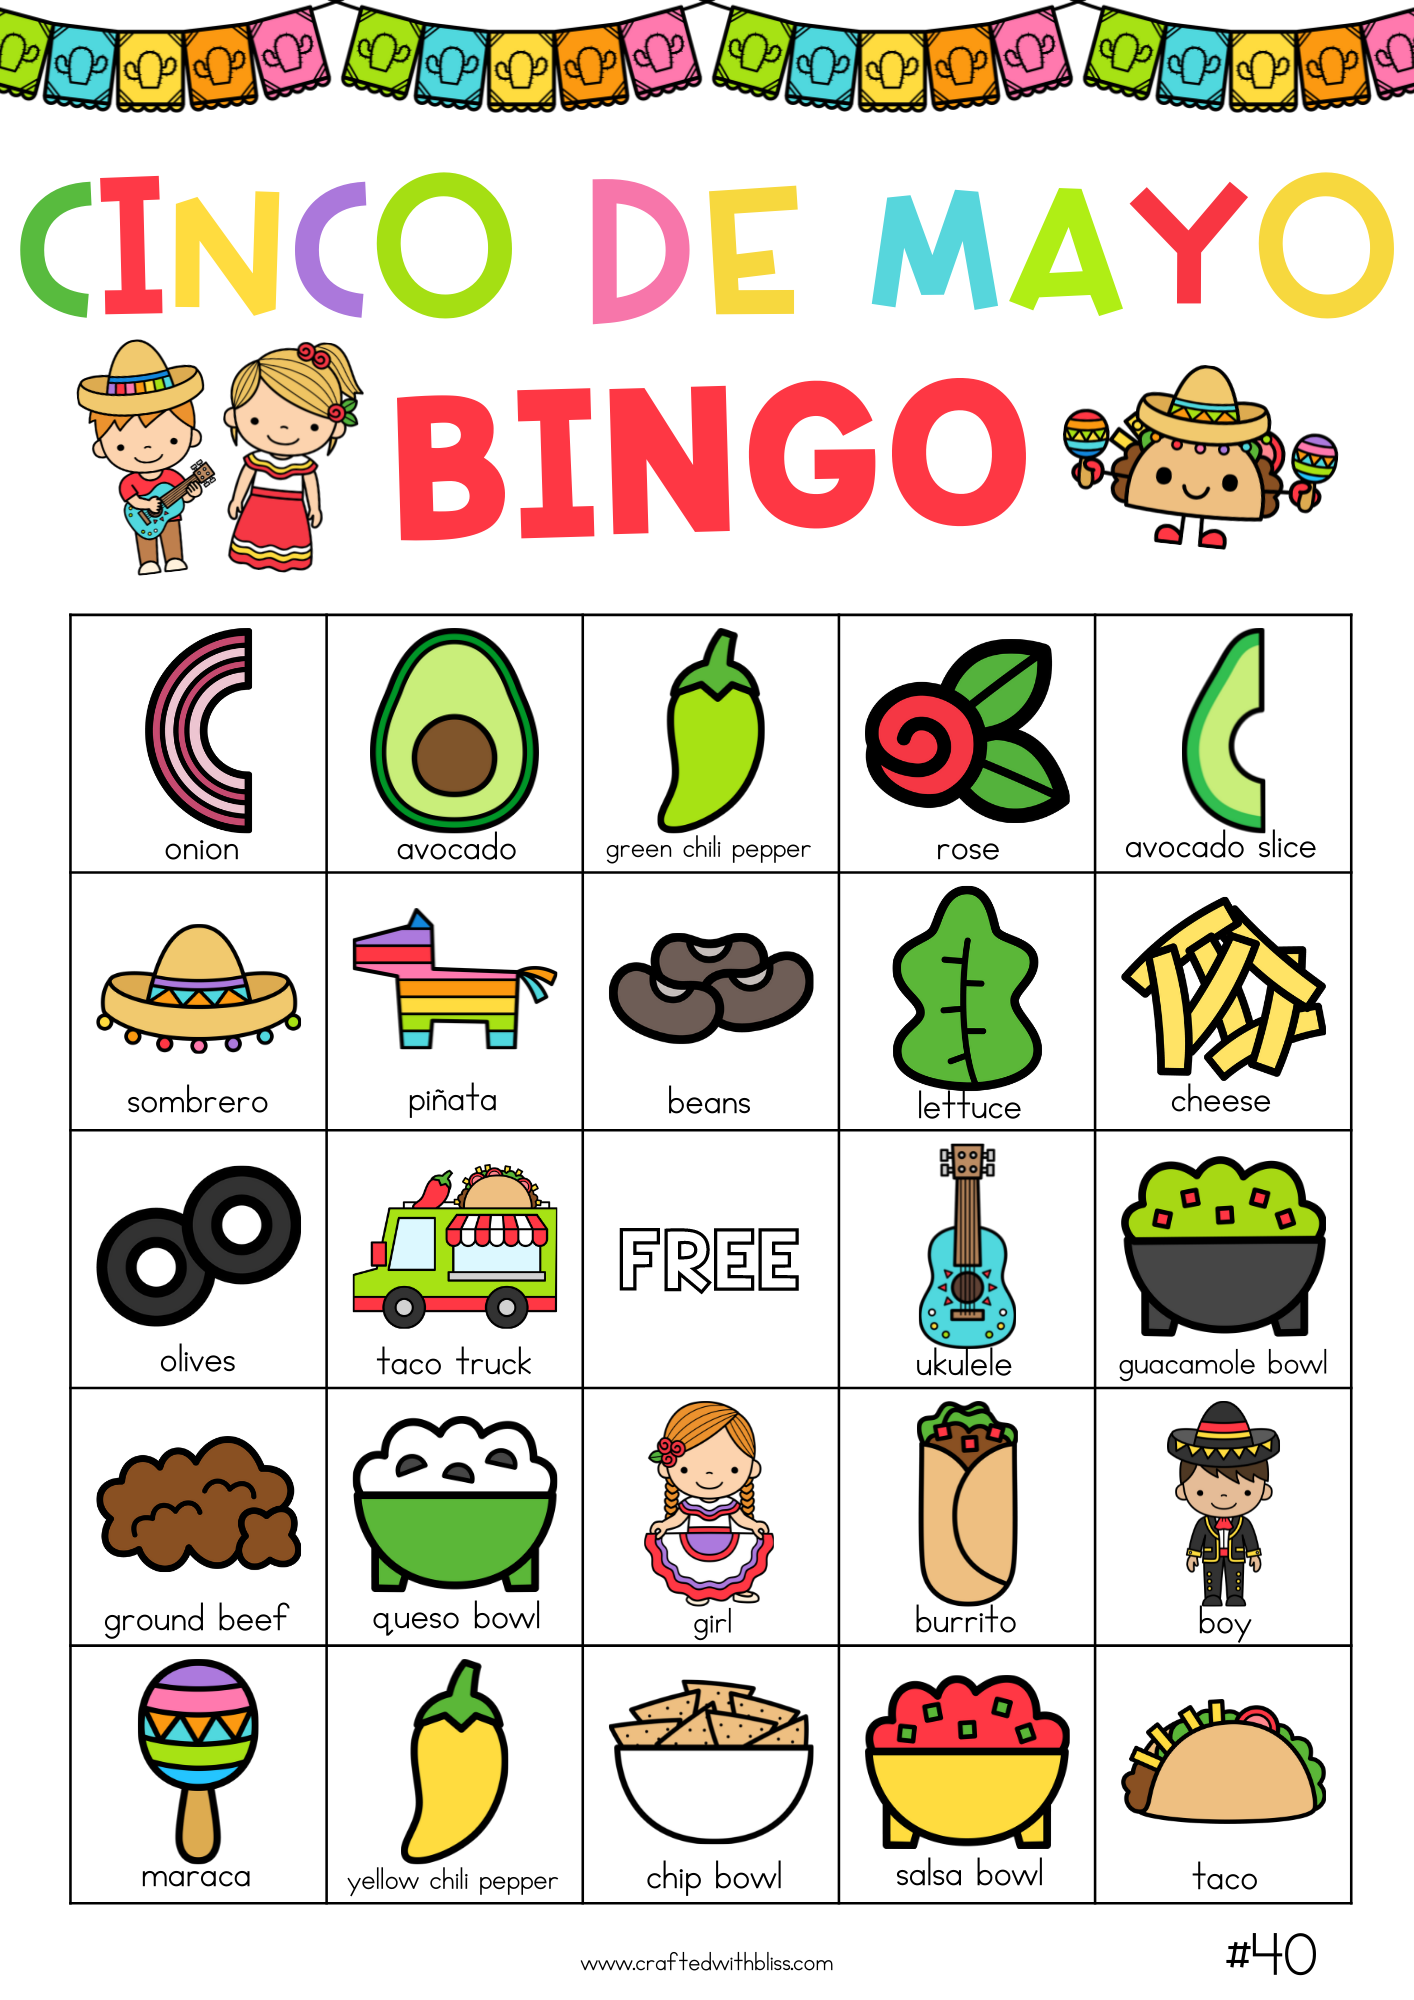 50 Cinco De Mayo Bingo Cards (5x5) – CraftedwithBliss